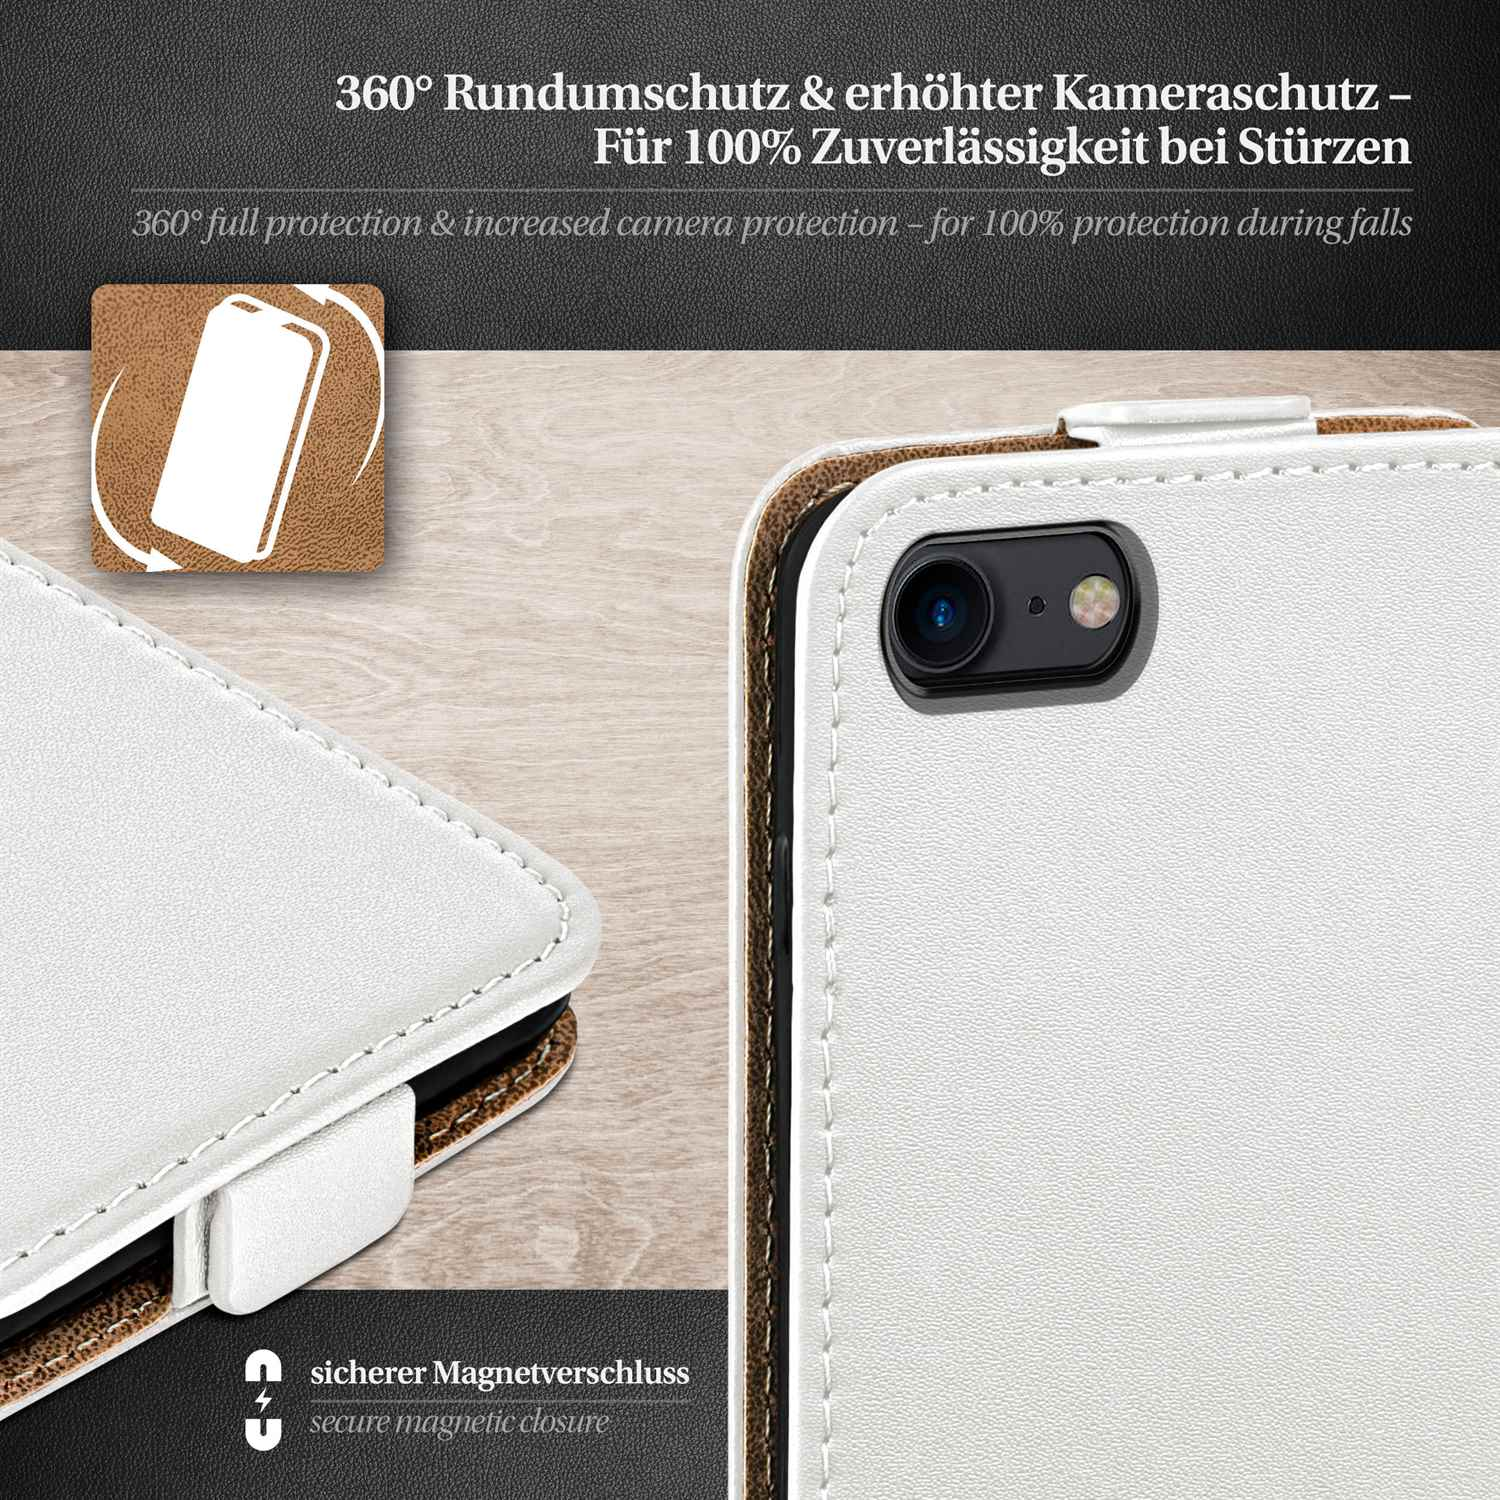 iPhone 8, Pearl-White Flip Apple, MOEX Case, Flip Cover,